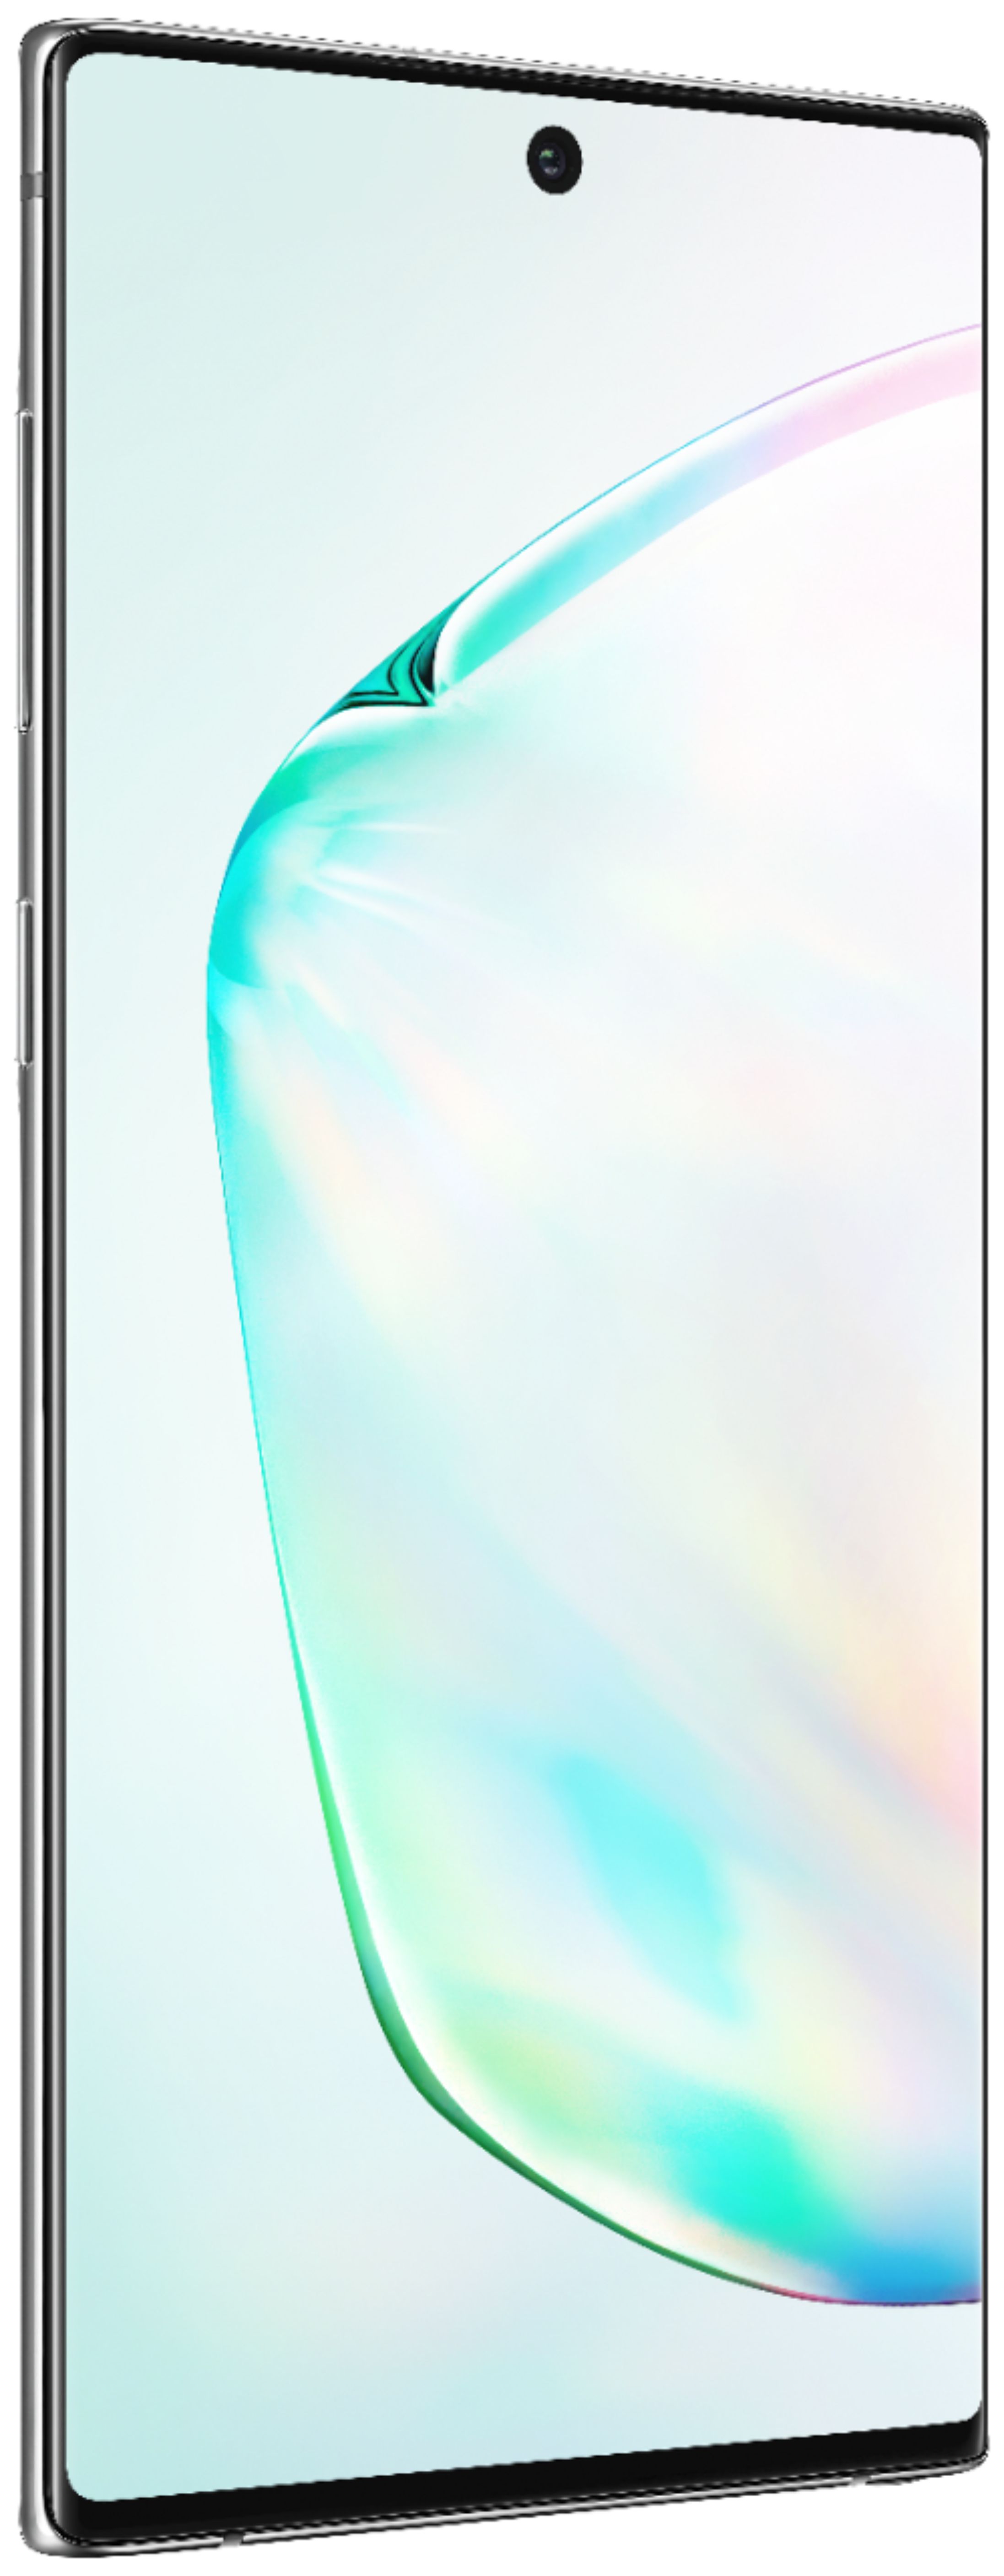 Verizon Samsung Galaxy Note 10 Plus - 256GB  